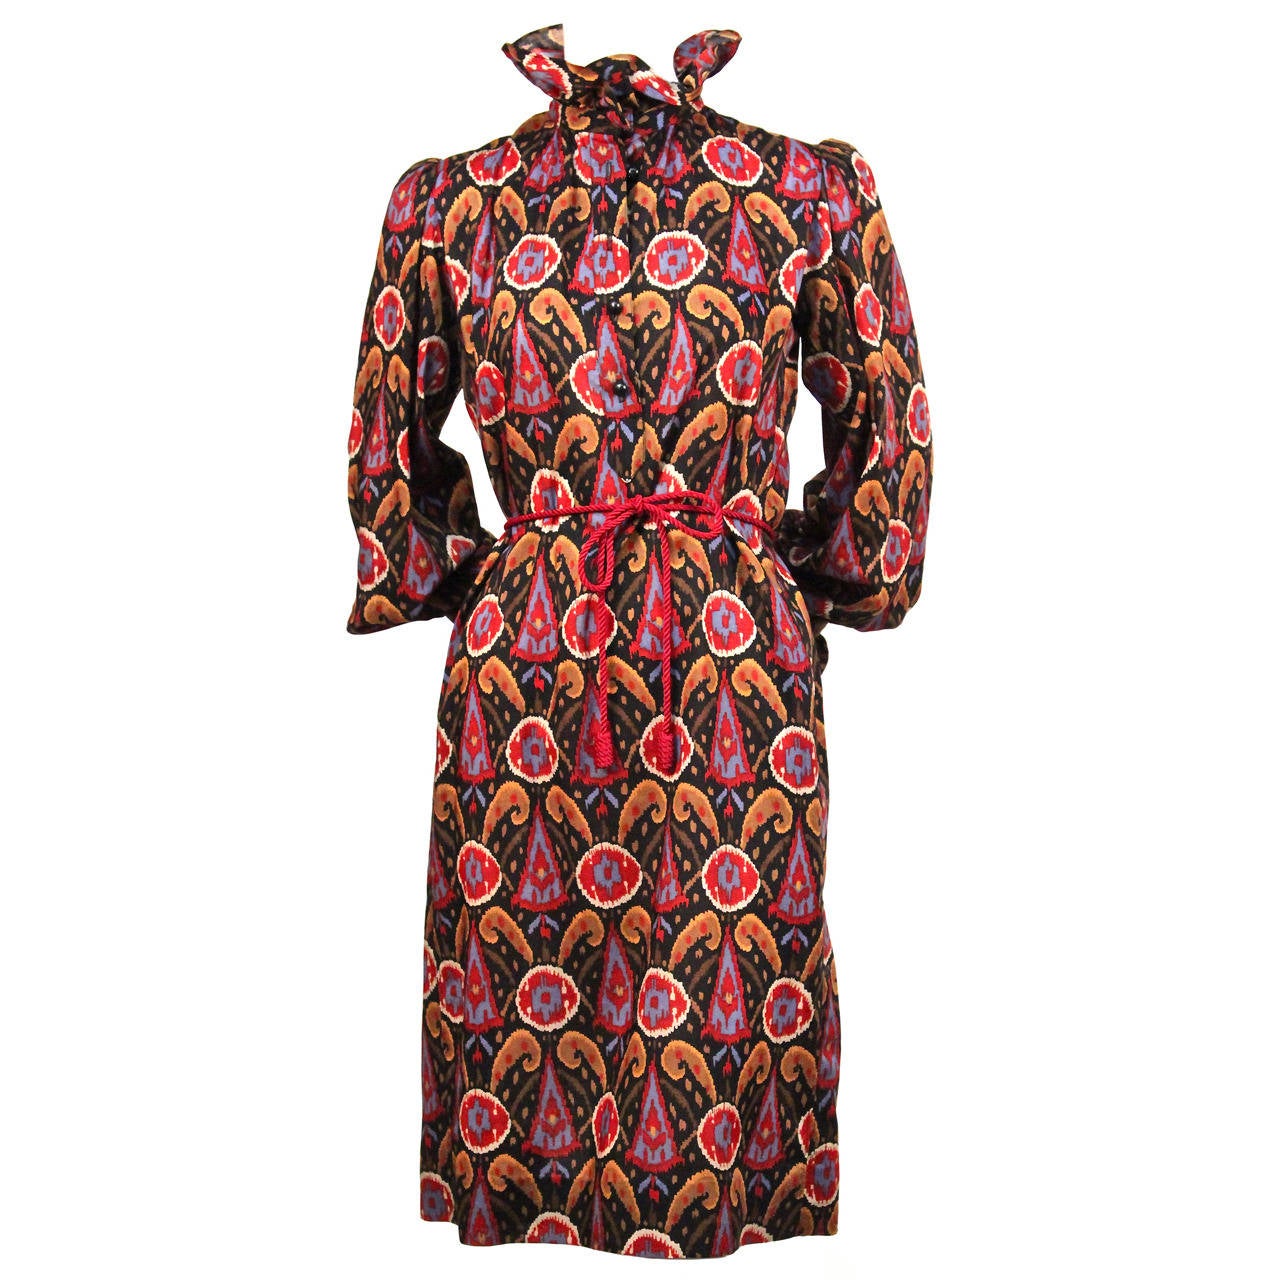 1970's YVES SAINT LAURENT wool challis ikat print dress with rope belt